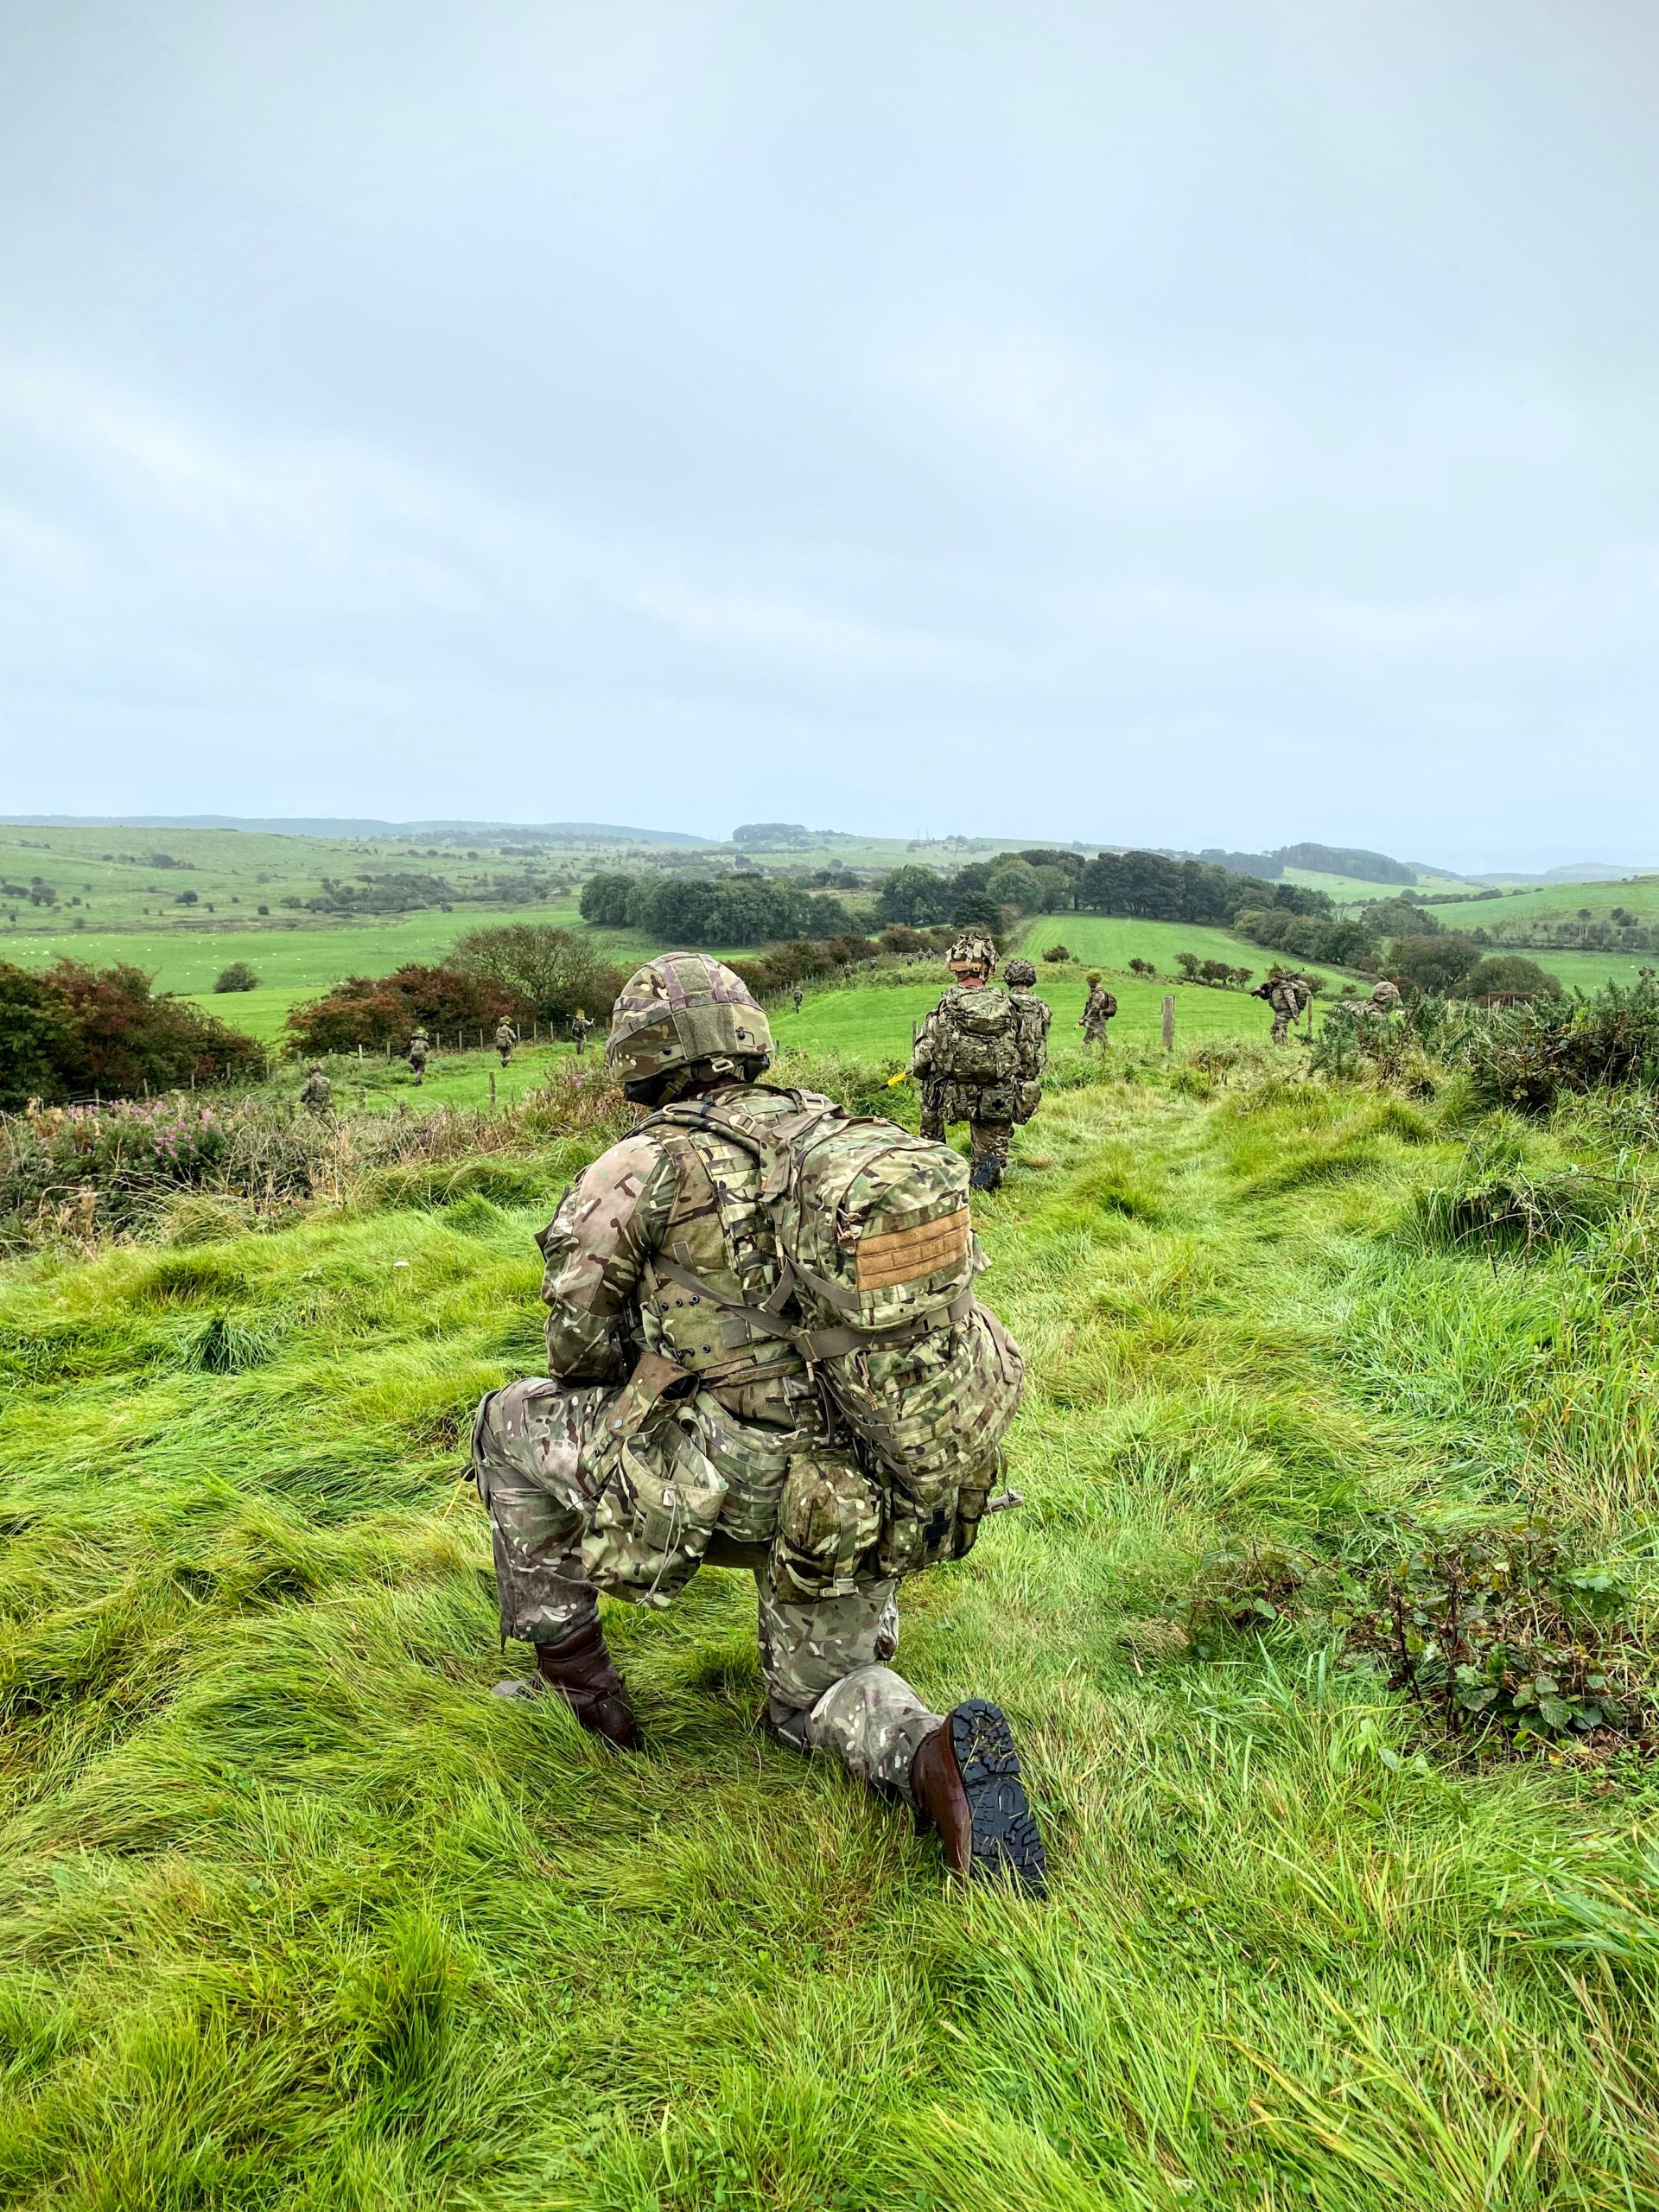 RAF Regiment in a field doing ambush training